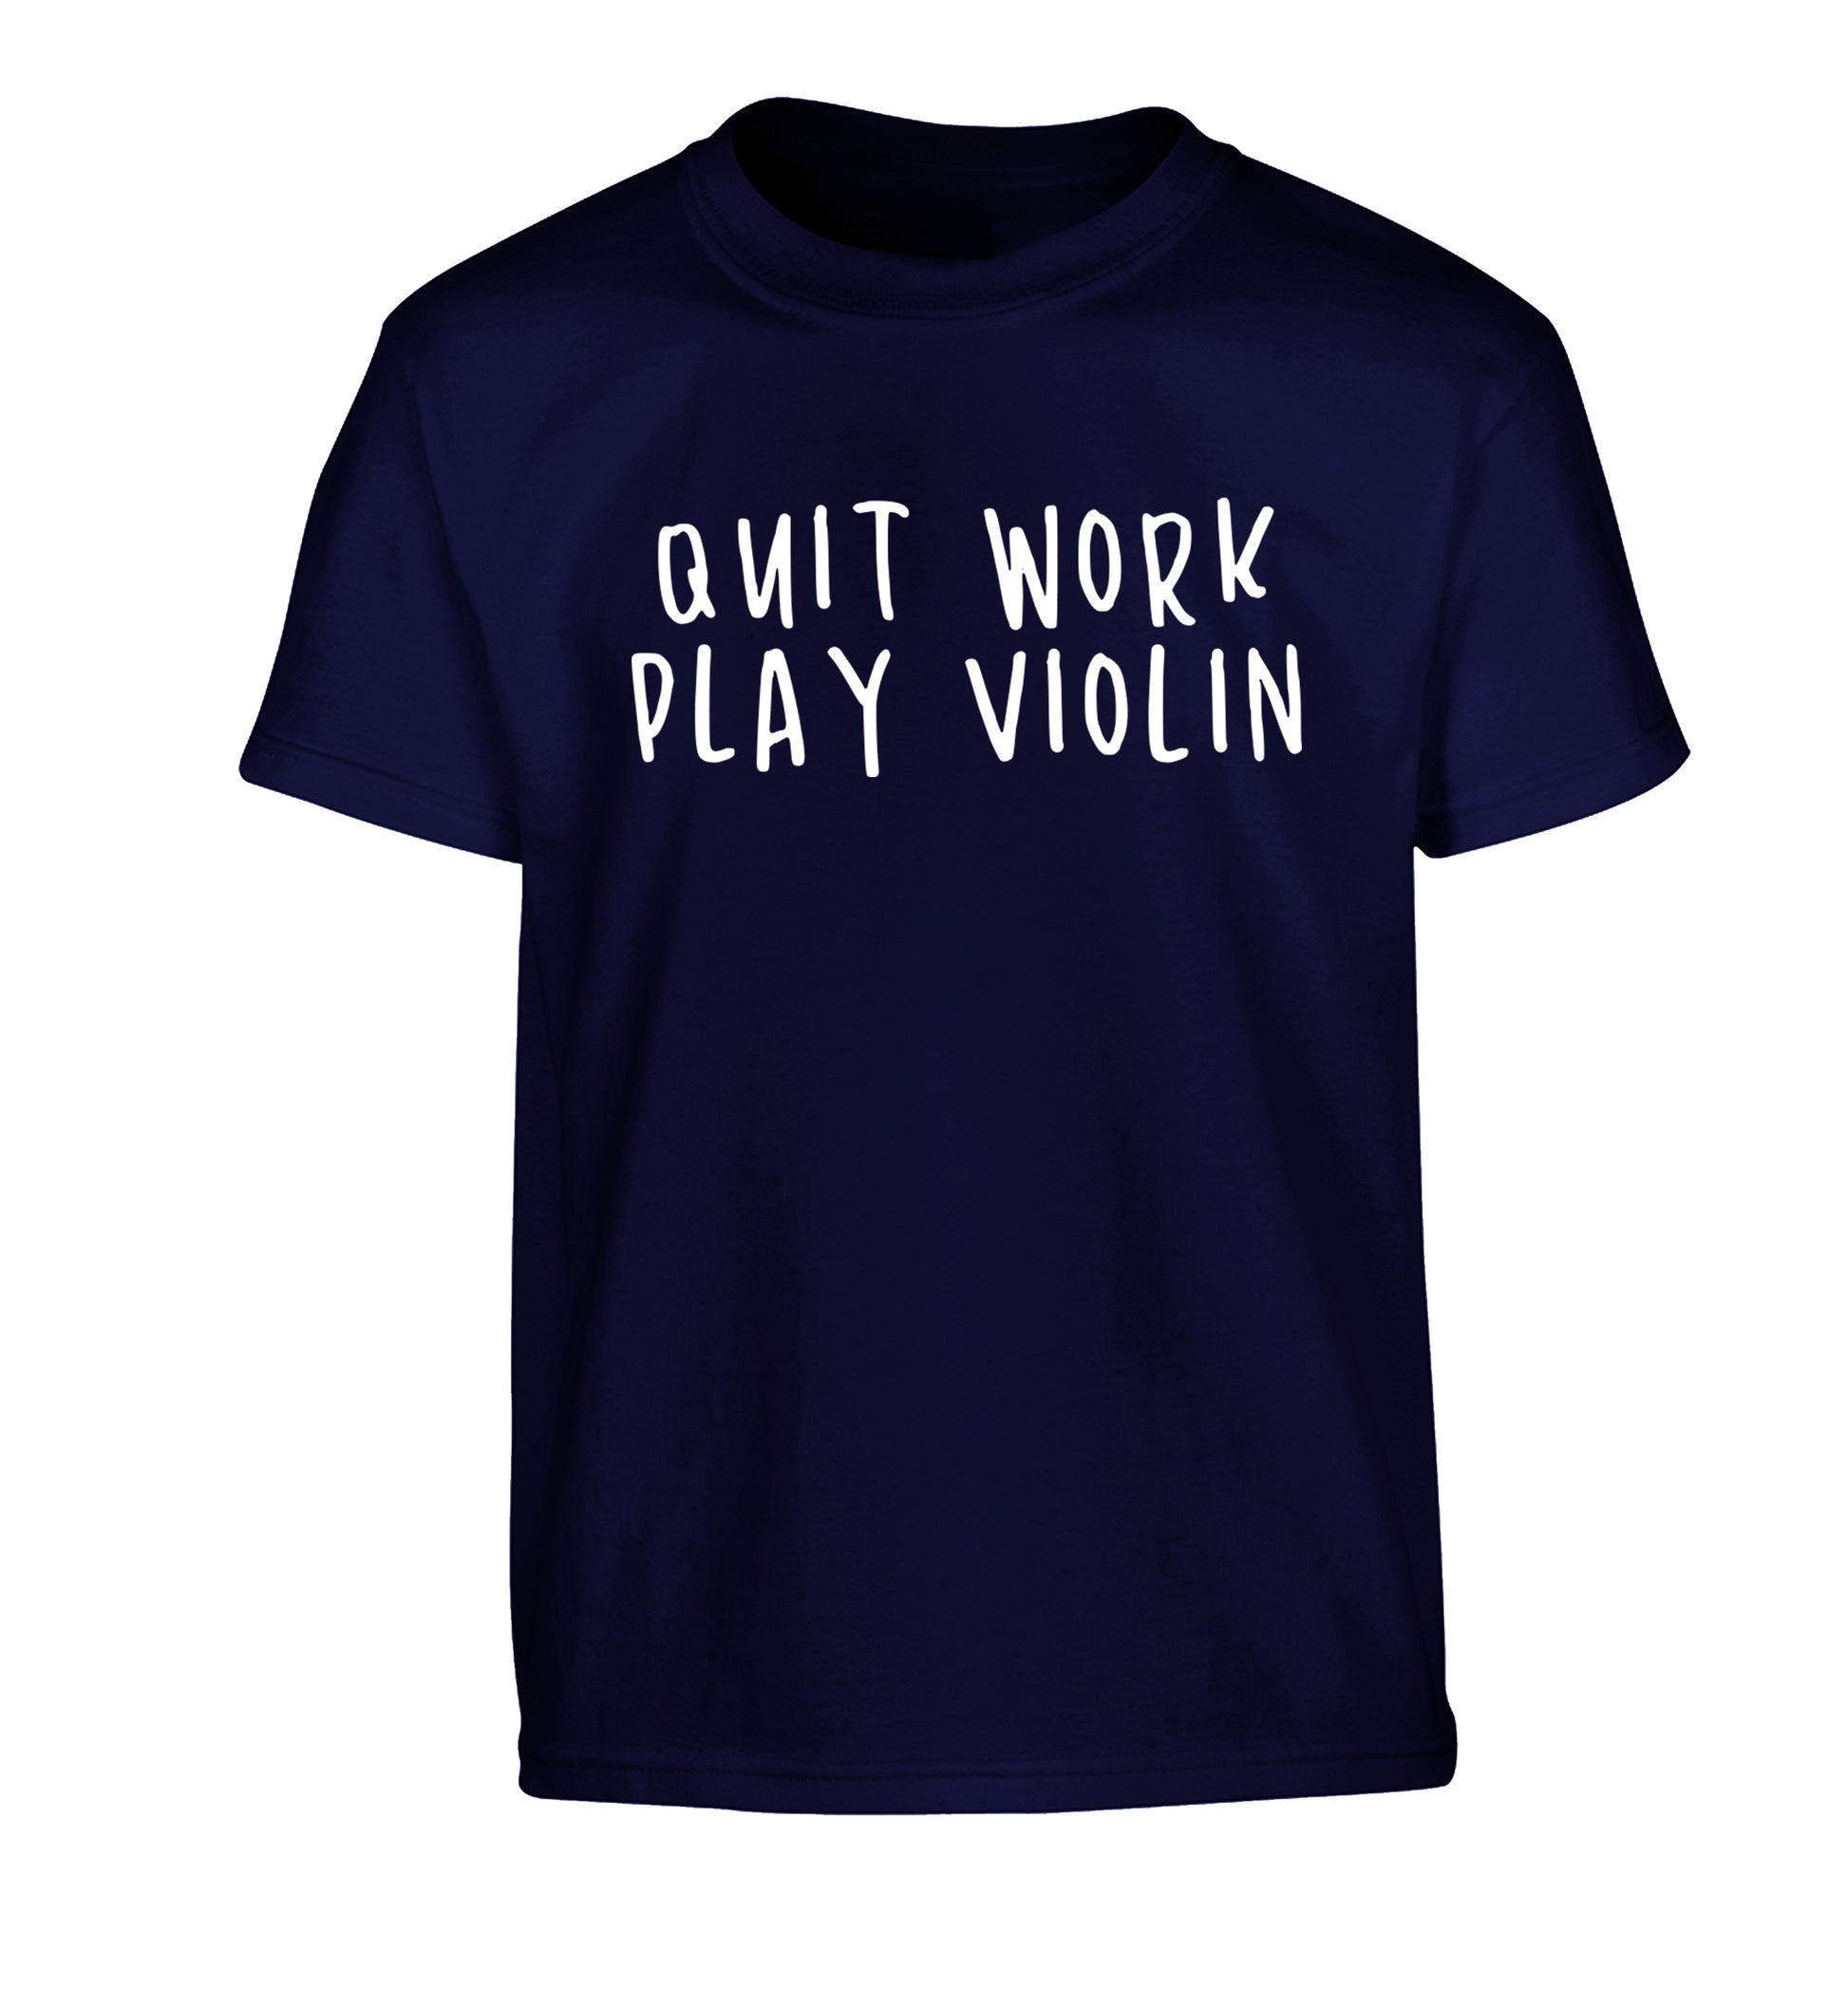 Quit work play violin Children's navy Tshirt 12-13 Years